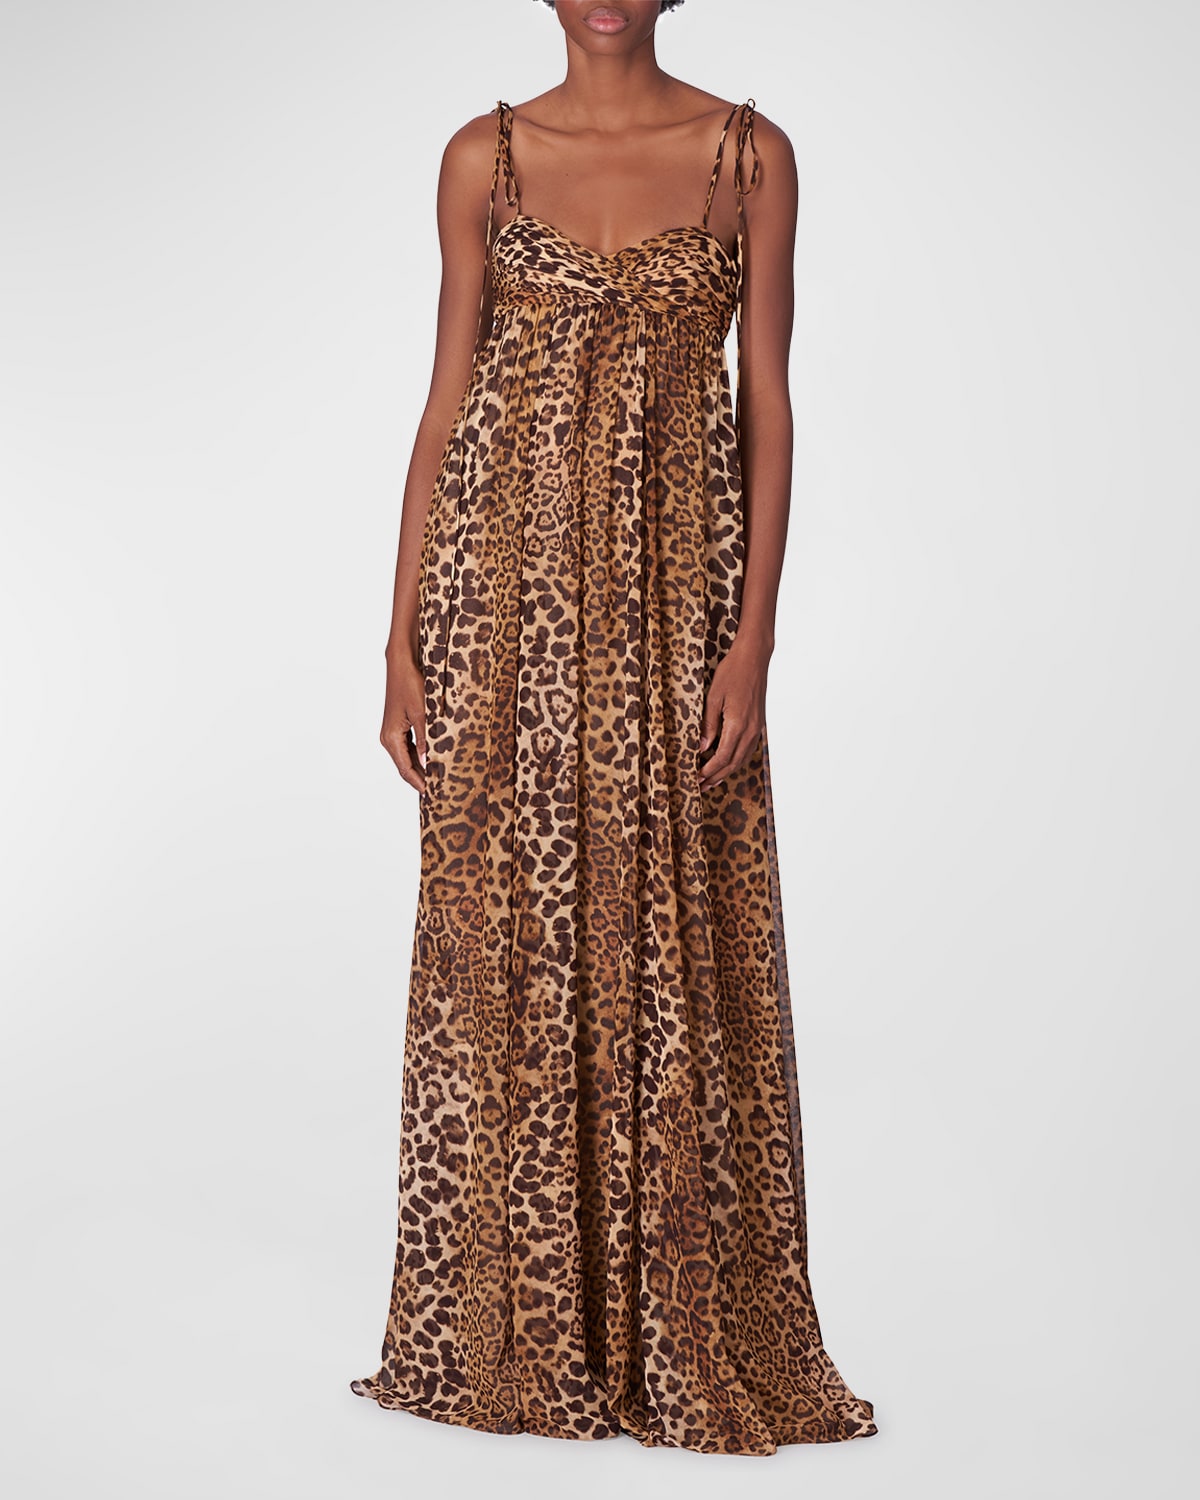 Leopard-Print Empire Waist Gown